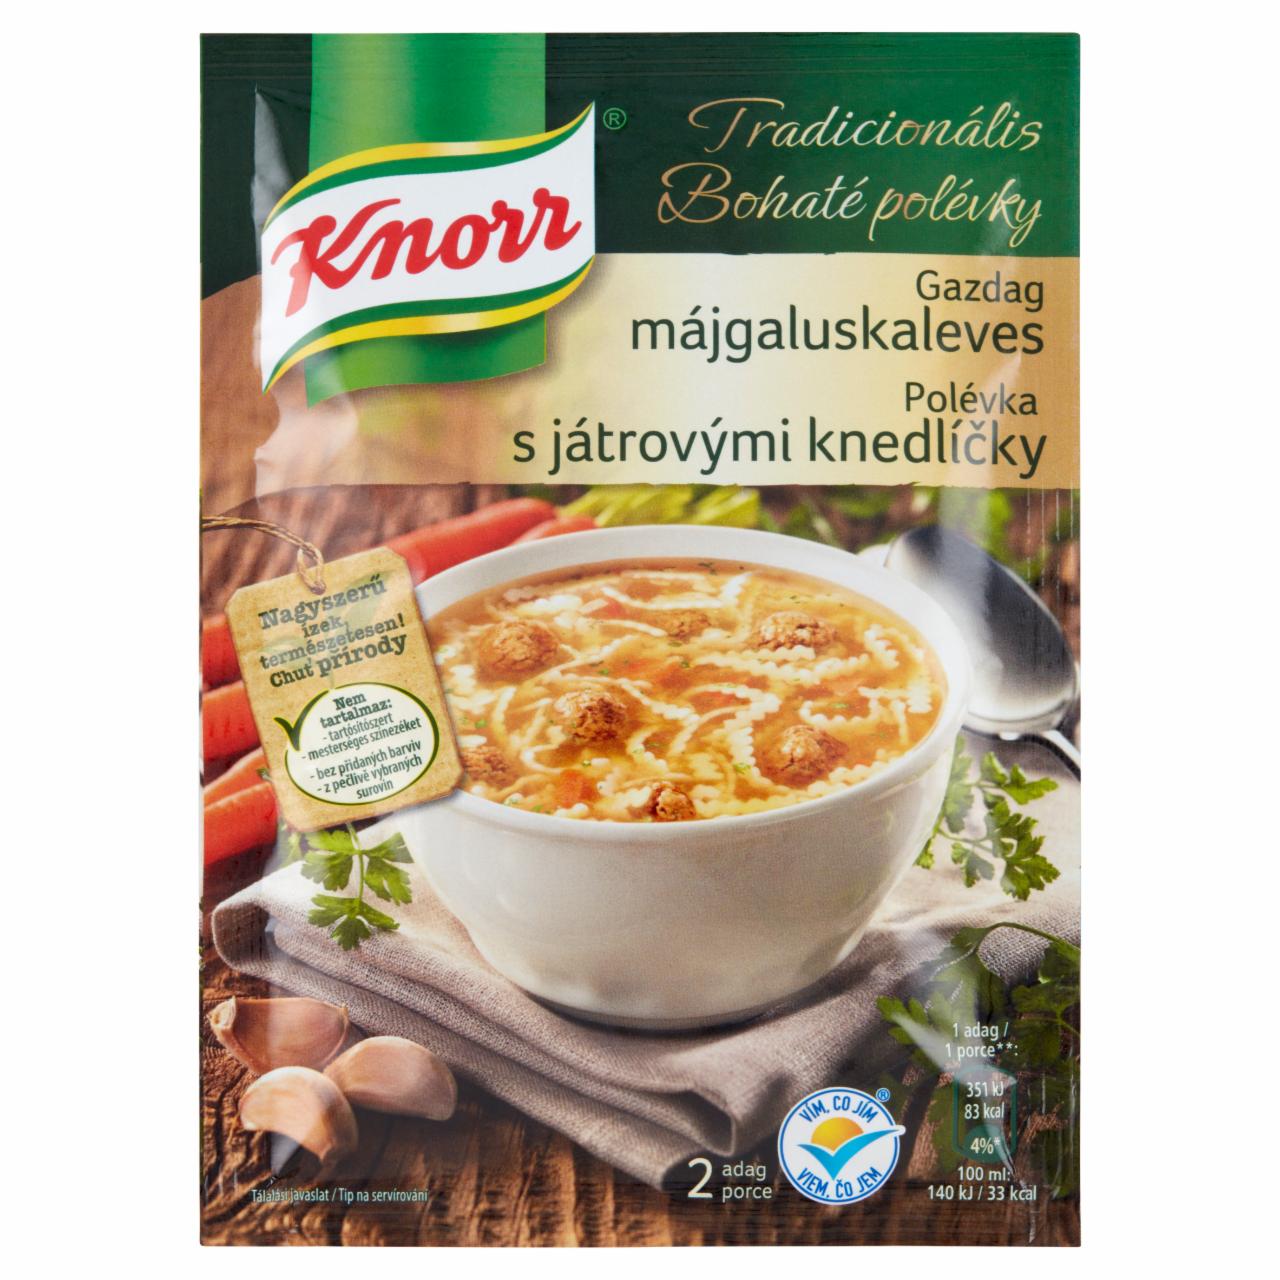 Képek - Knorr Tradicionális gazdag májgaluskaleves 44 g